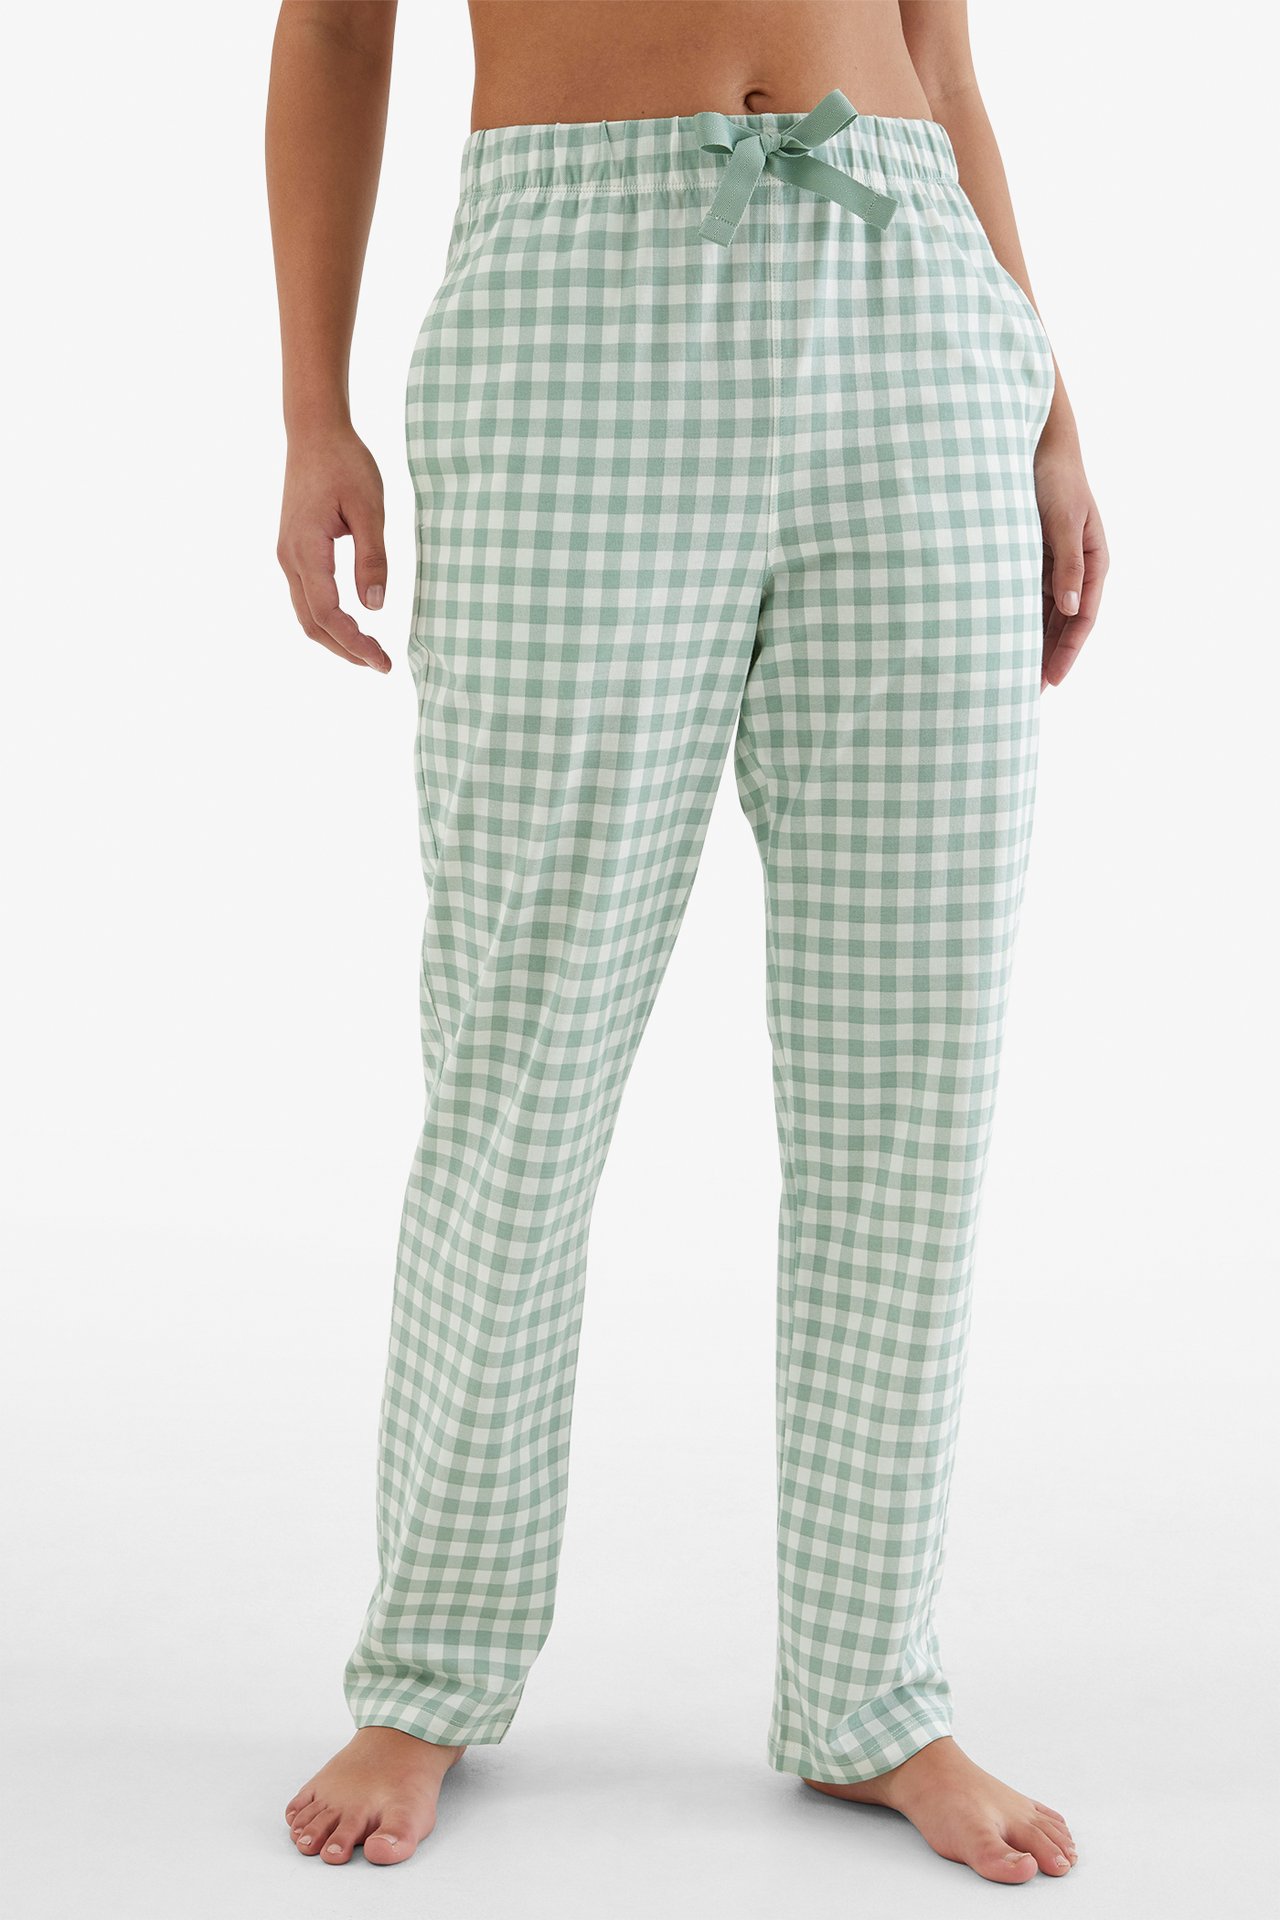 Pyjamasbukse Grønn - null - 1